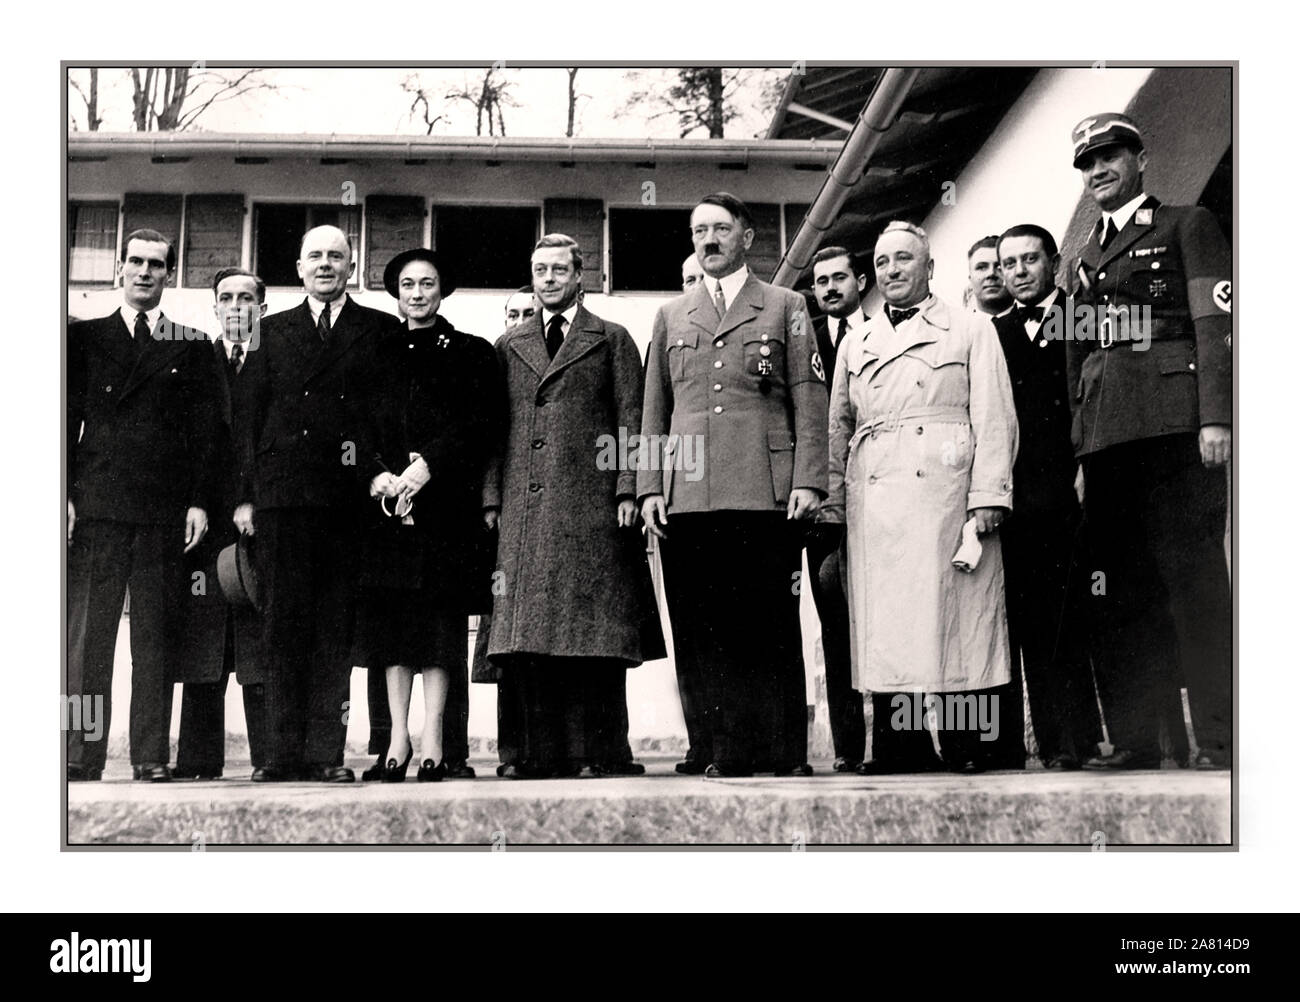 ADOLF HITLER DUKE & DUCHESS WINDSOR der Herzog und die Herzogin von Windsor besucht Adolf Hitler am 22. Oktober 1937 im Berghof, Berchtesgaden Obersalzberg Deutschland Stockfoto